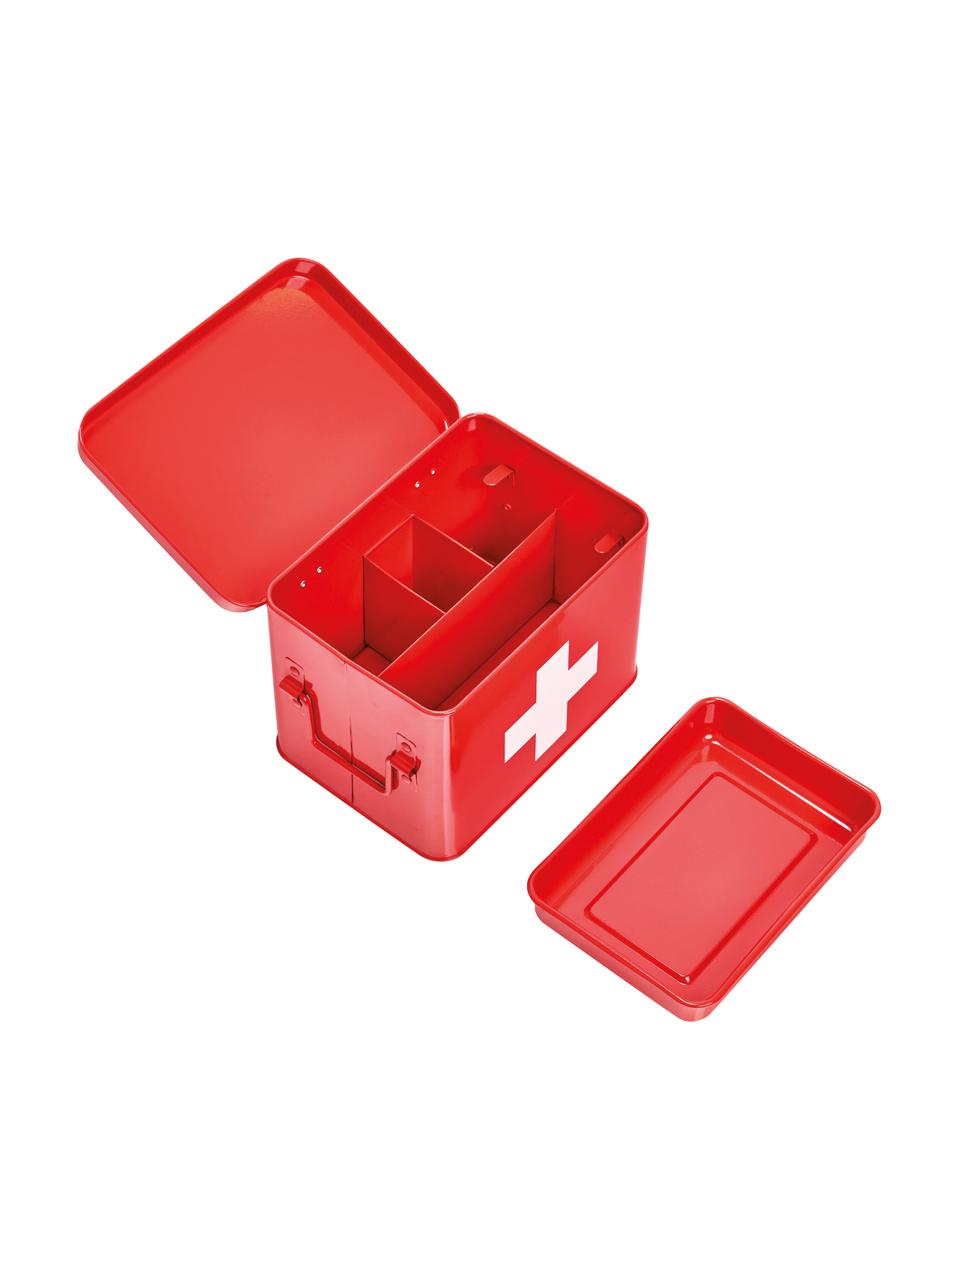 Aufbewahrungsbox Medizina, Metall, beschichtet, Rot, Weiß, B 23 x H 16 cm